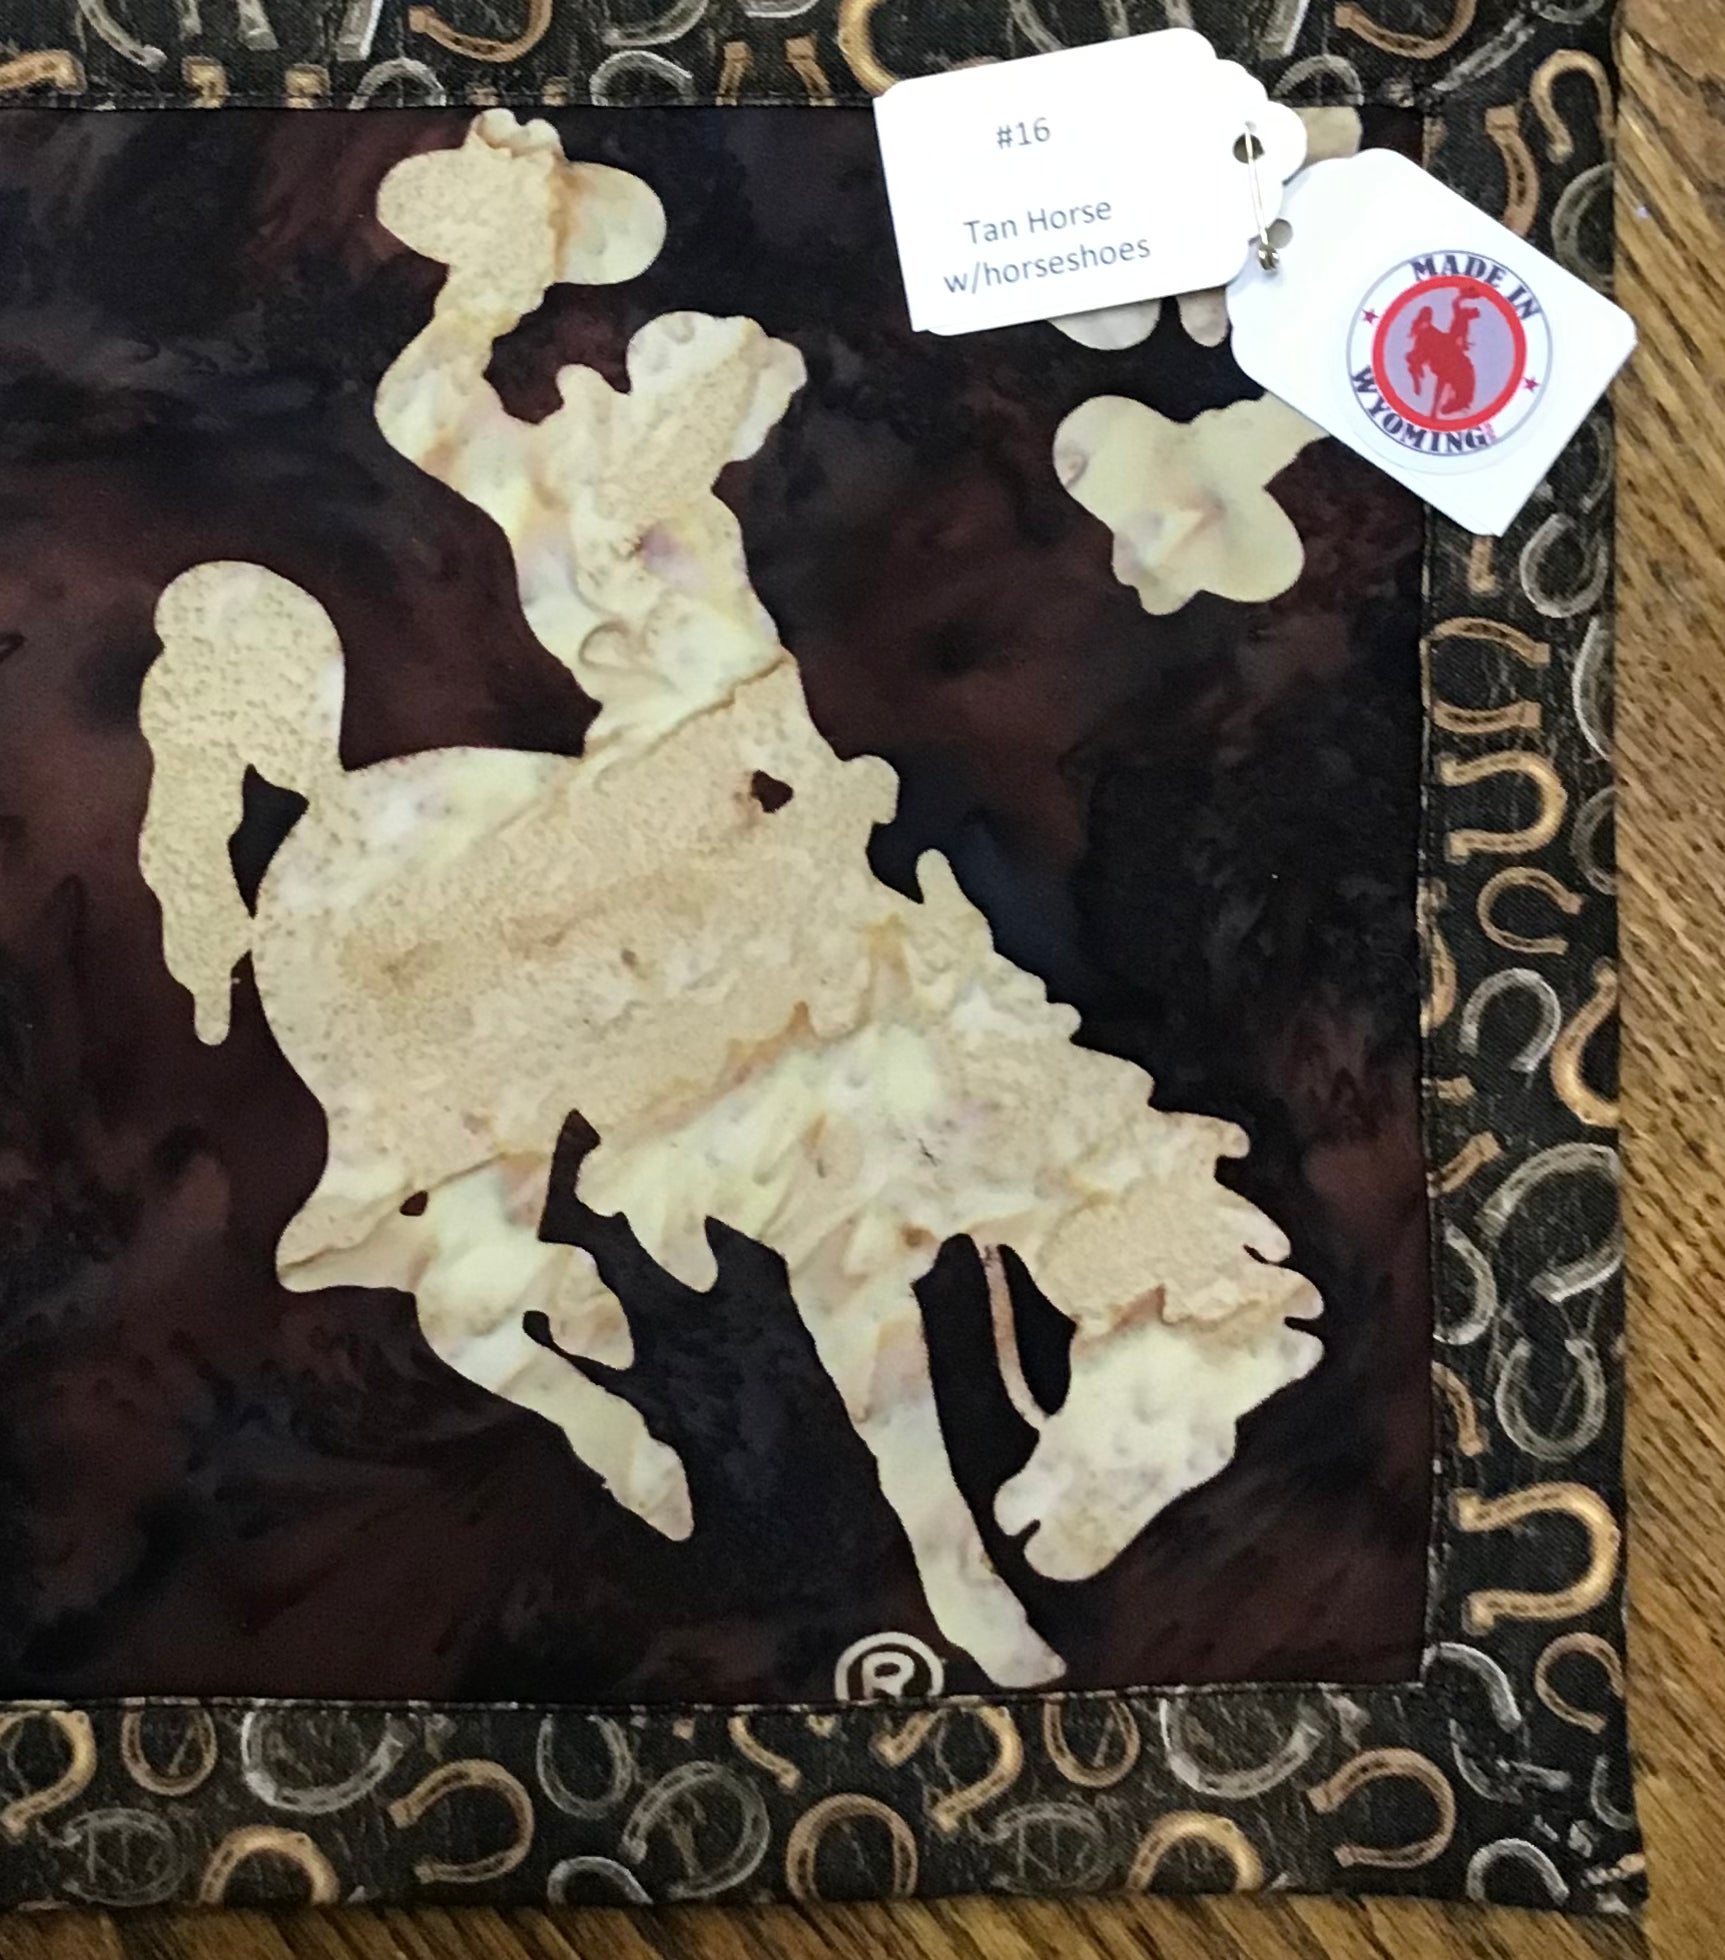 CHRIS' CREATIONS Wyoming Trivet Tan horse w/horseshoes